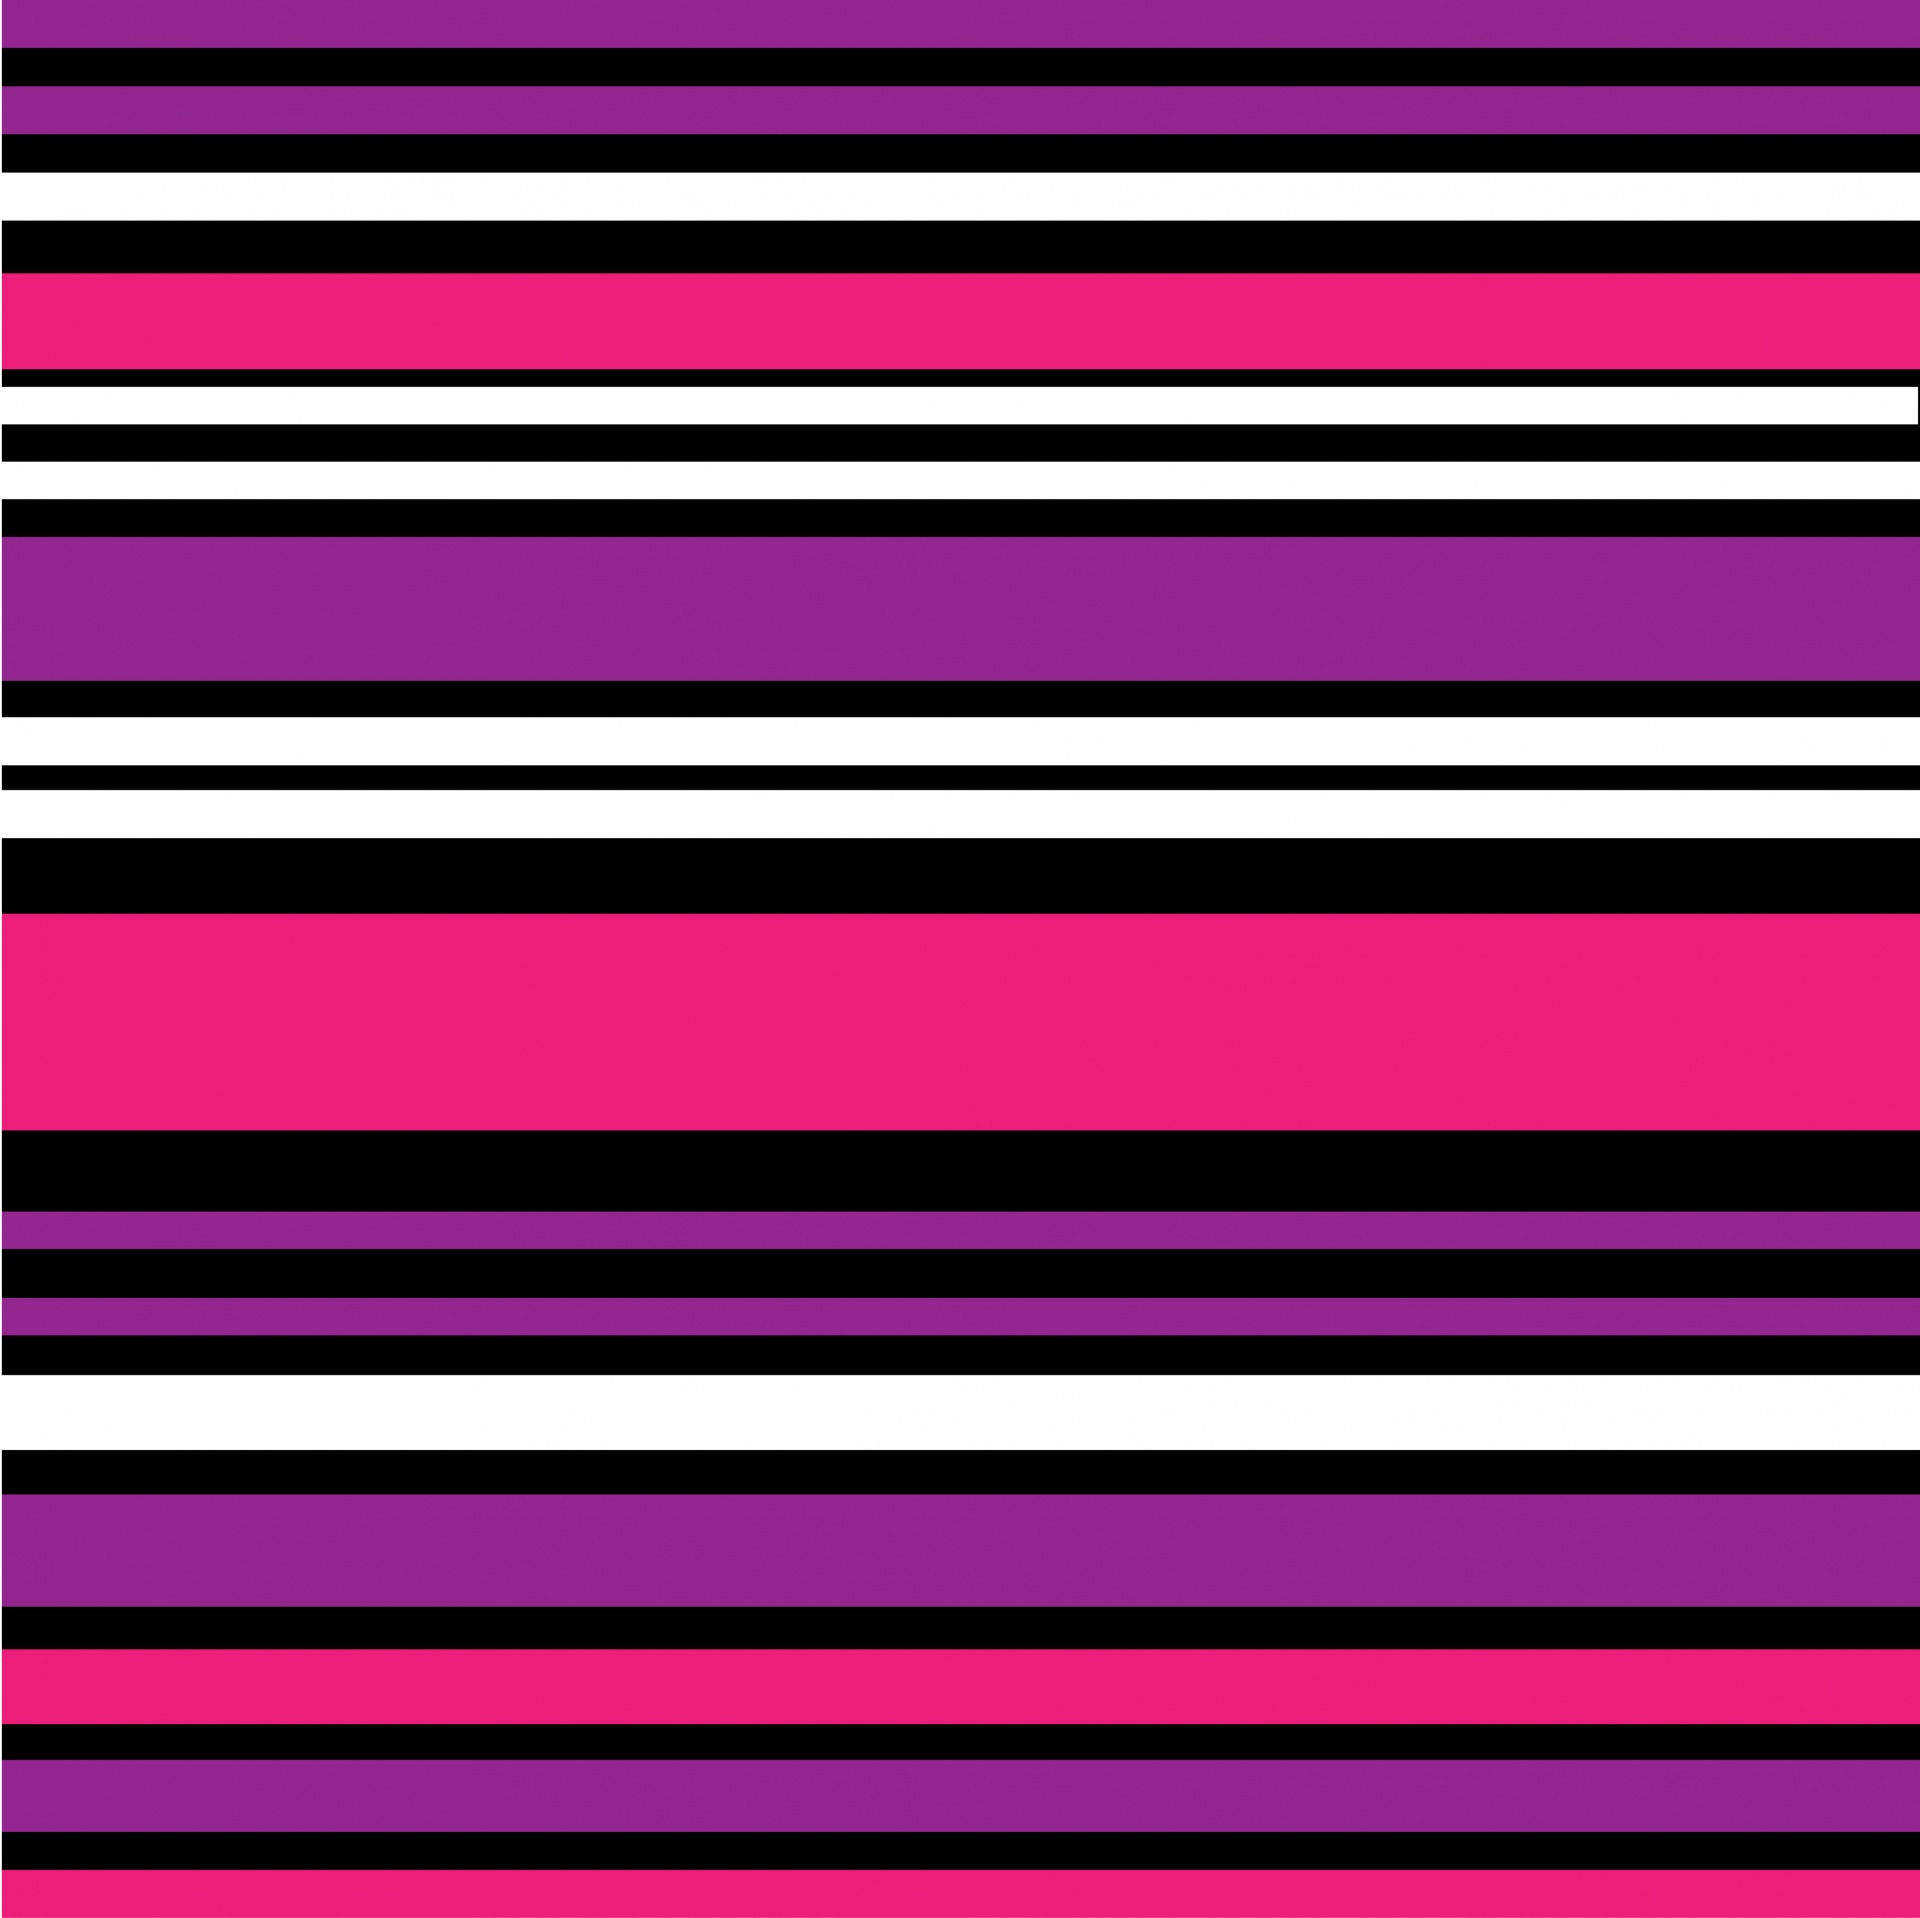 stripes stripe striped free photo